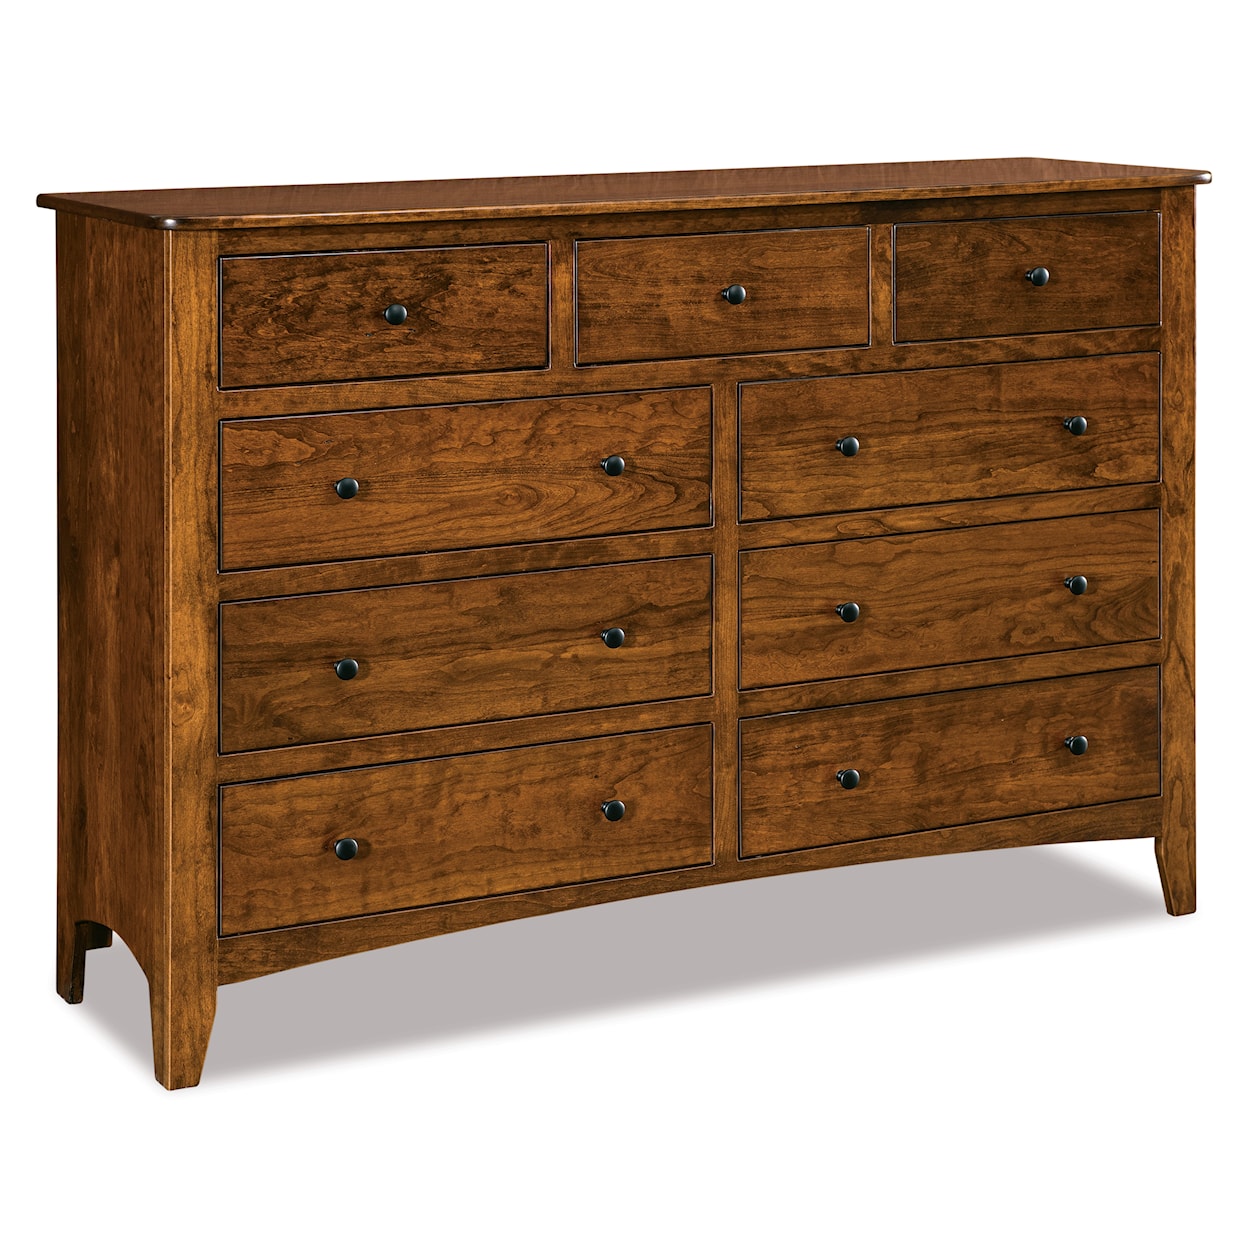 Archbold Furniture Bob Timberlake 9-Drawer Dresser